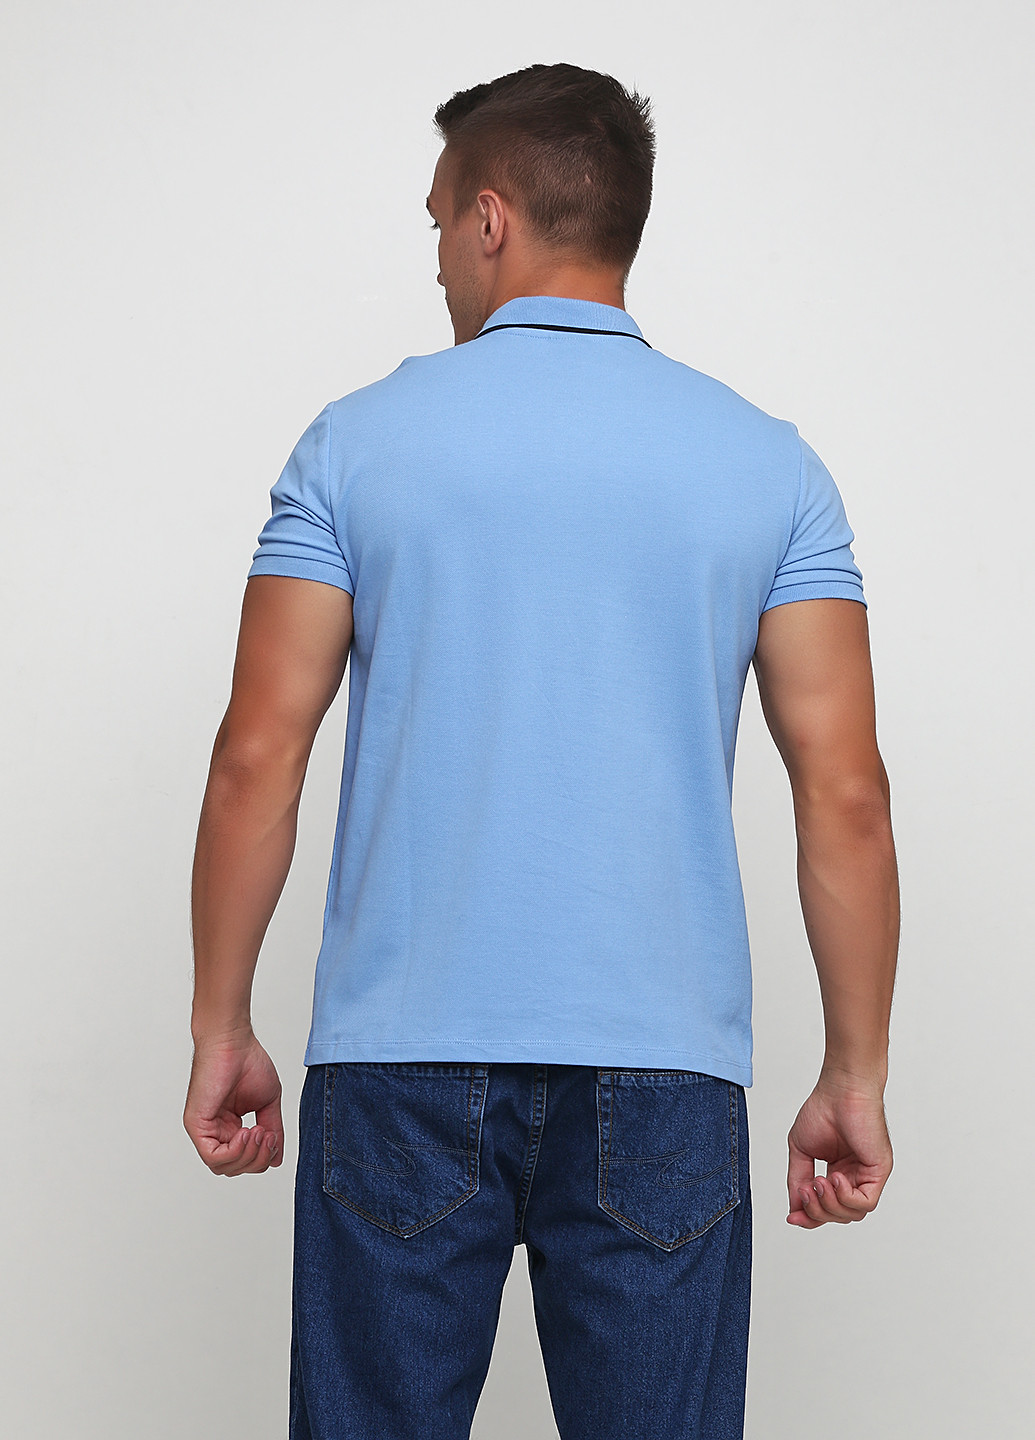 Голубой футболка-футболка для мужчин H&M с надписью